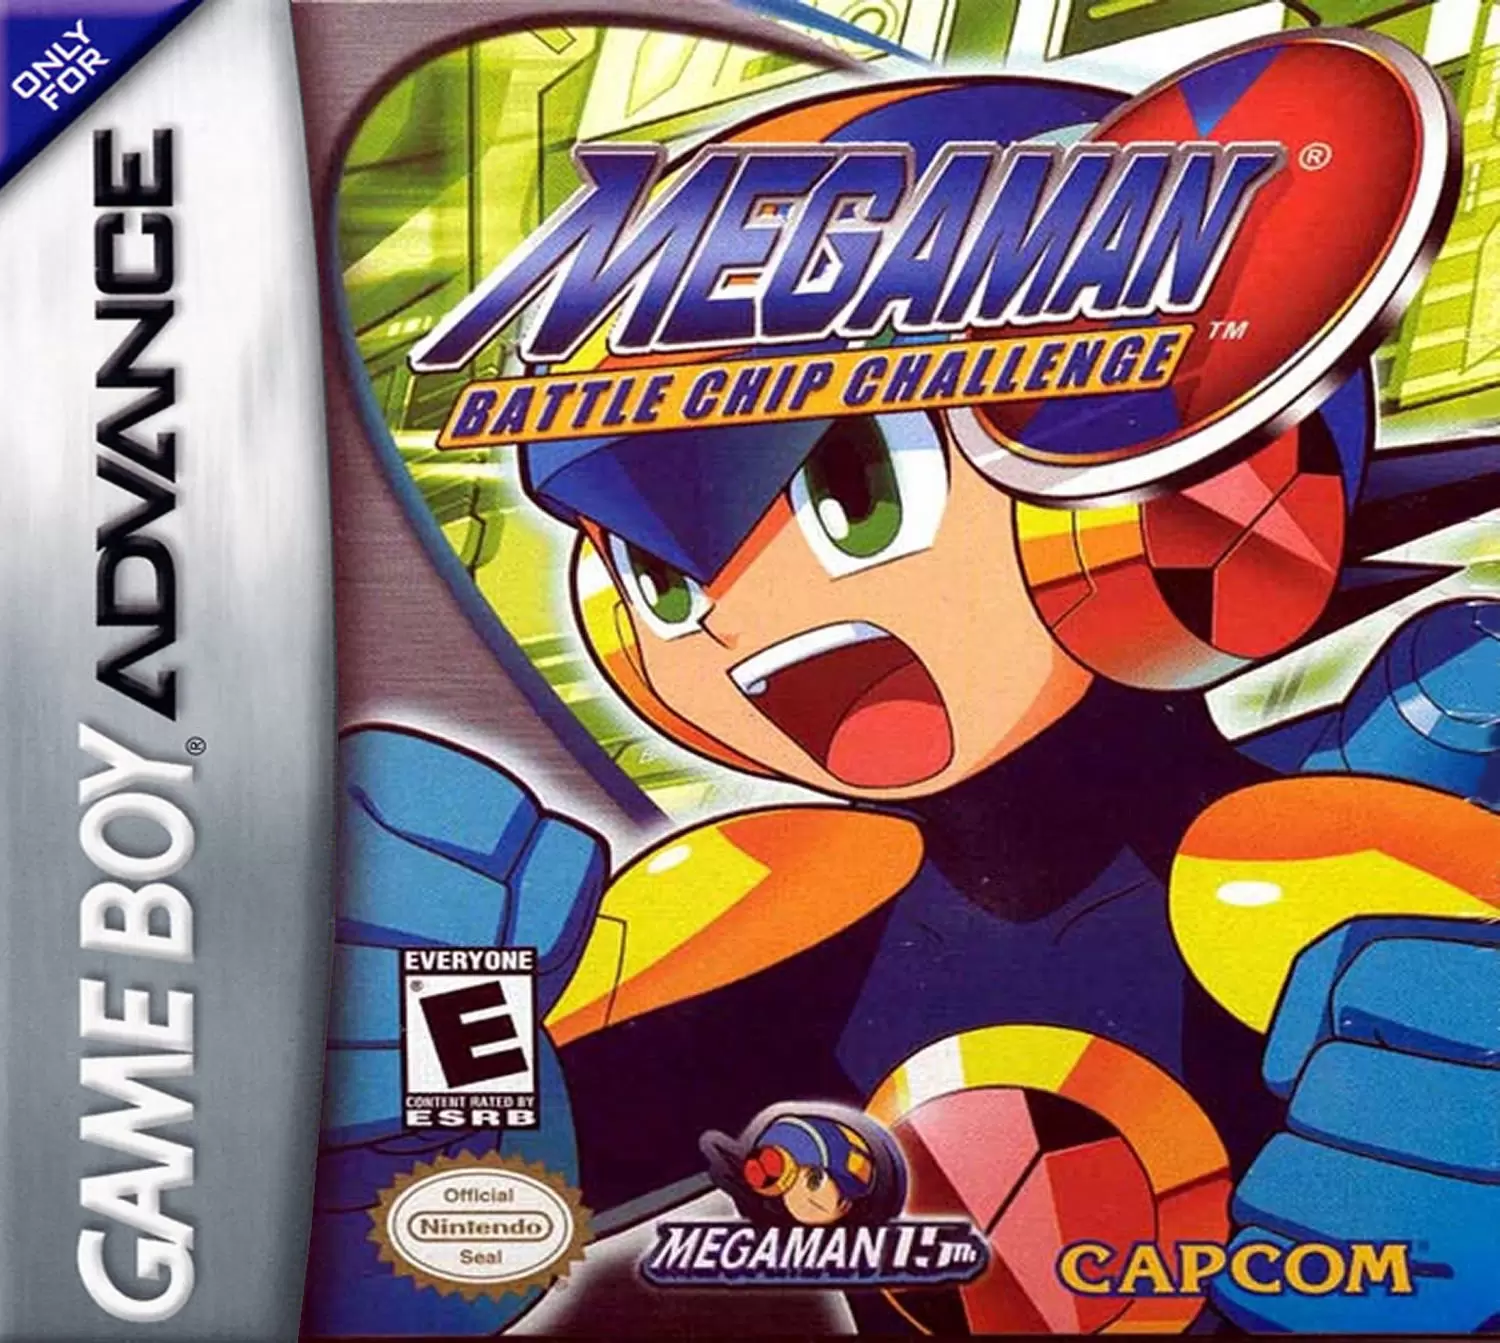 Game Boy Advance Games - Mega Man: Battle Chip Challenge